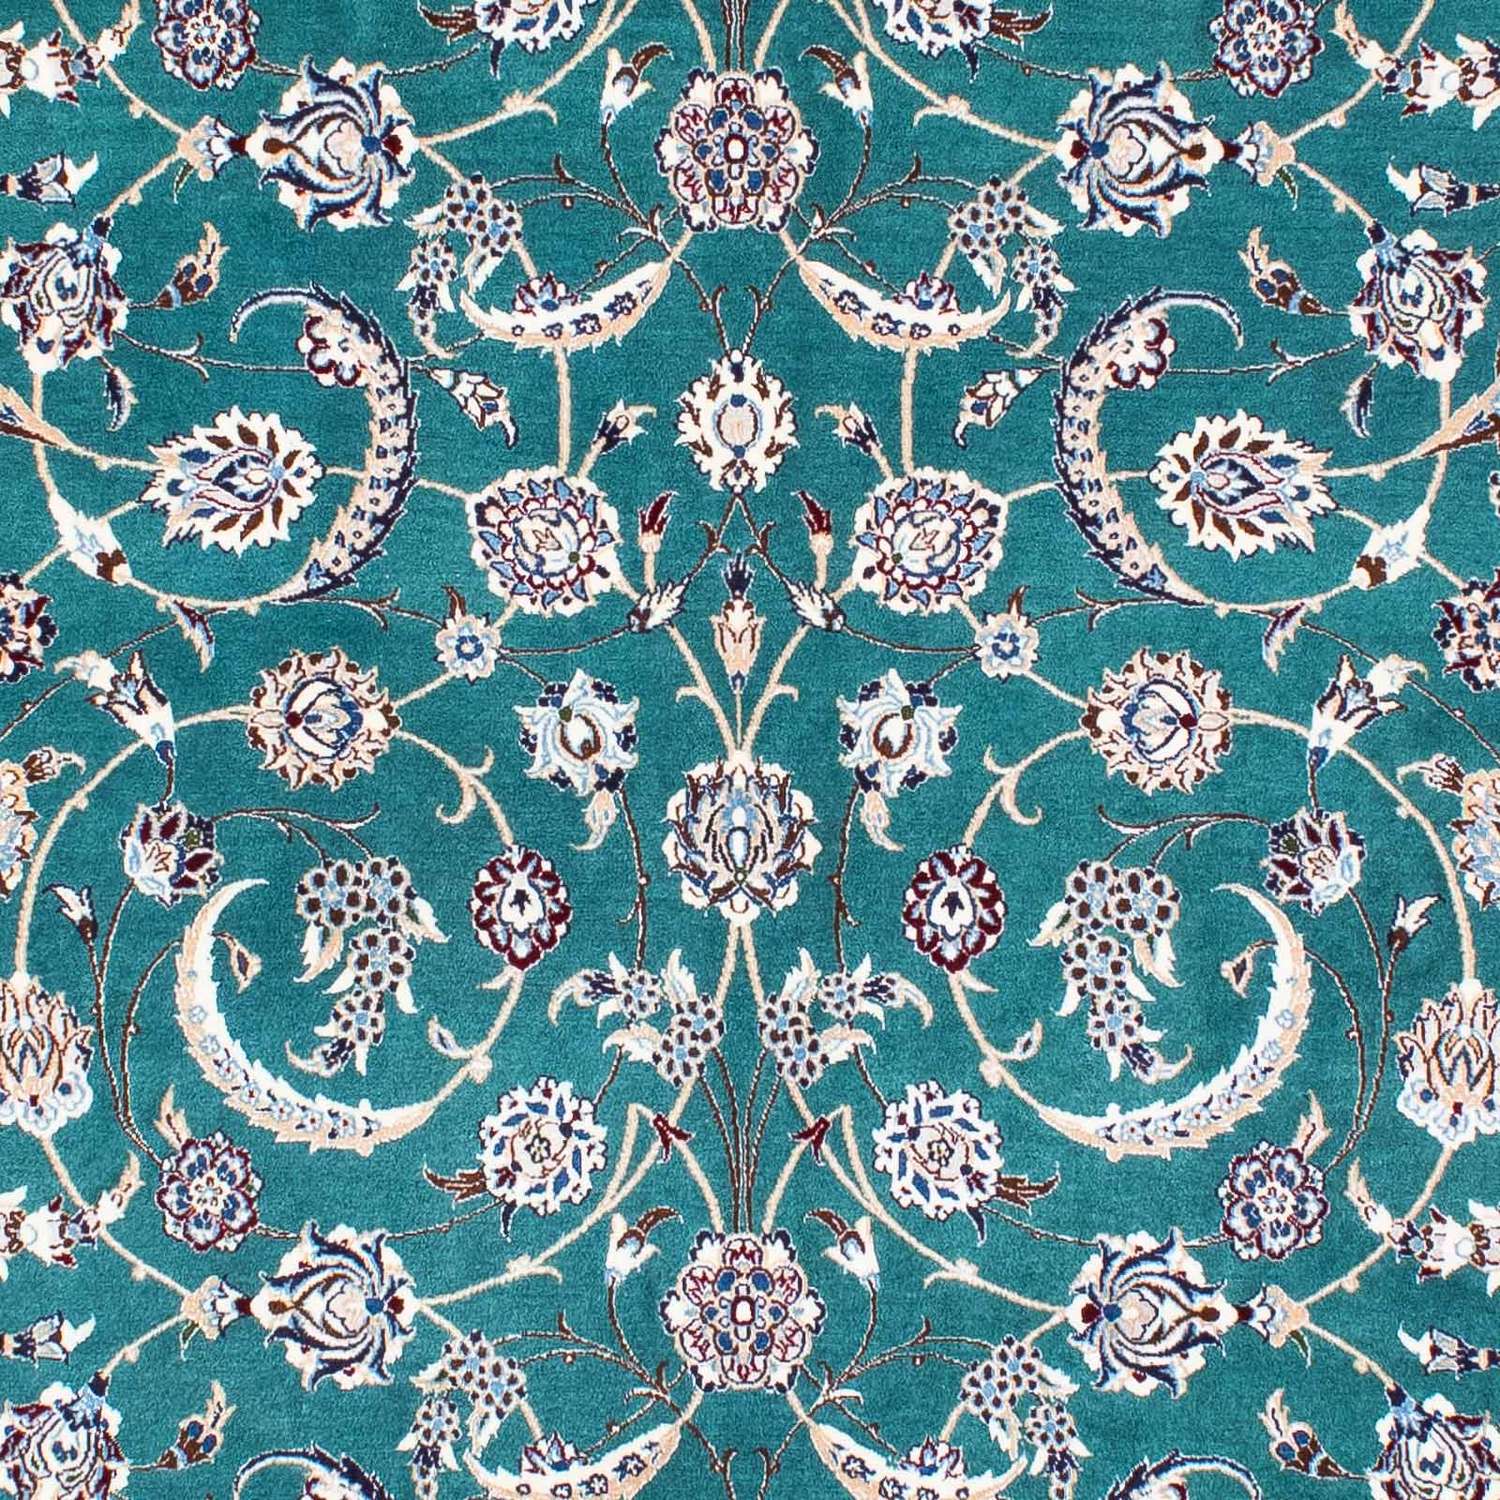 Tapis persan - Nain - Premium - 228 x 146 cm - bleu